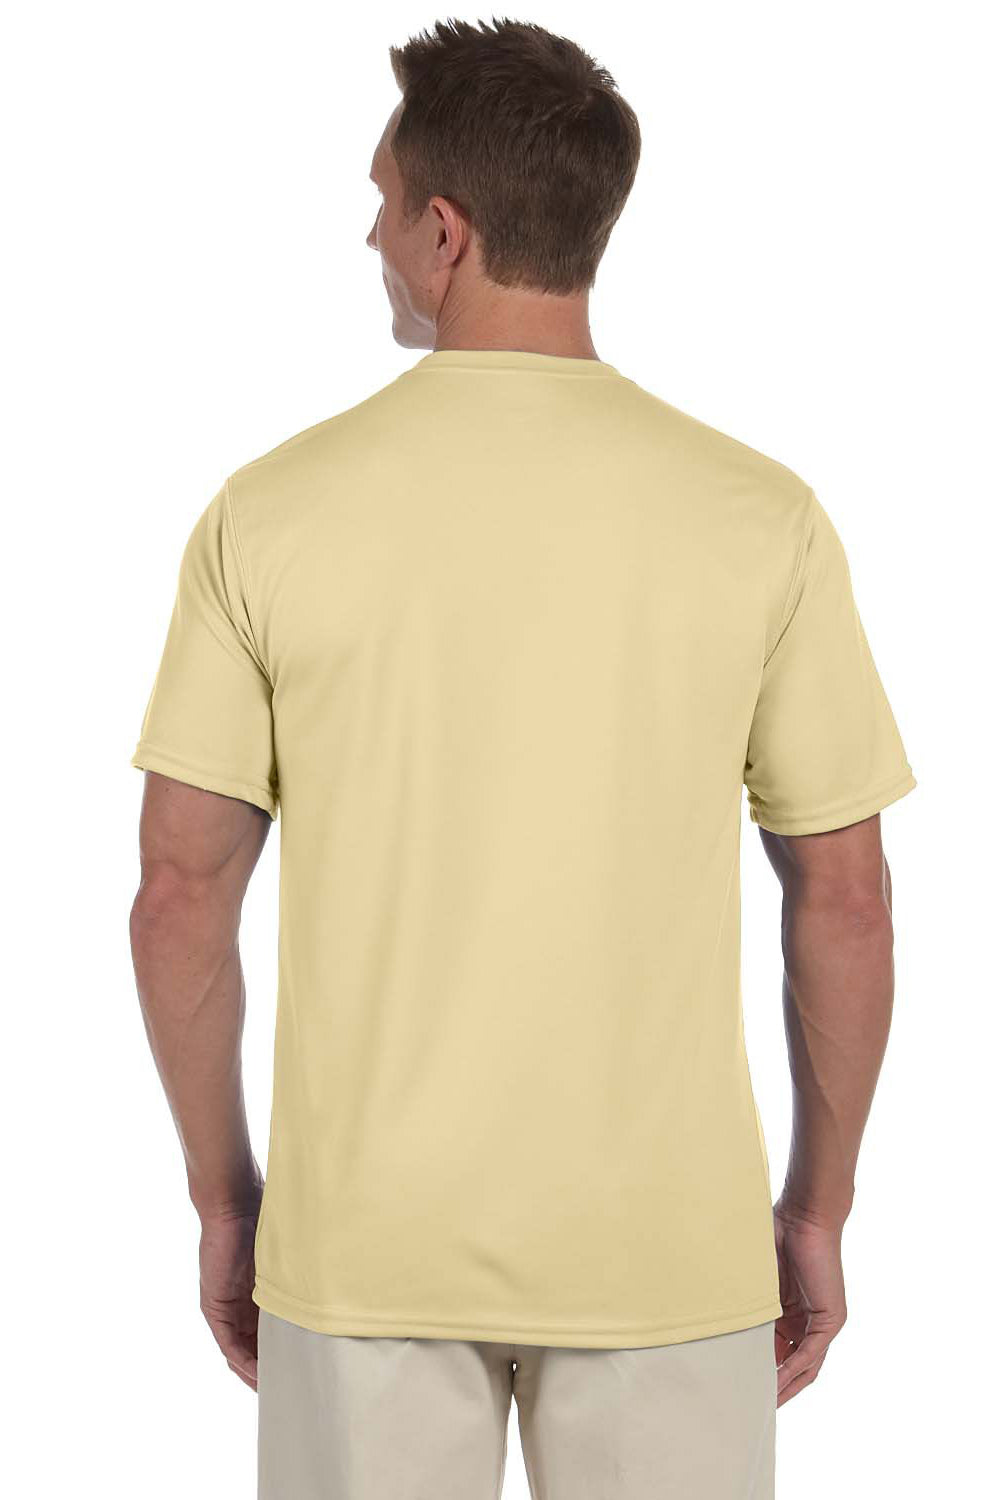 Augusta Sportswear 790 Mens Moisture Wicking Short Sleeve Crewneck T-Shirt Vegas Gold Model Back